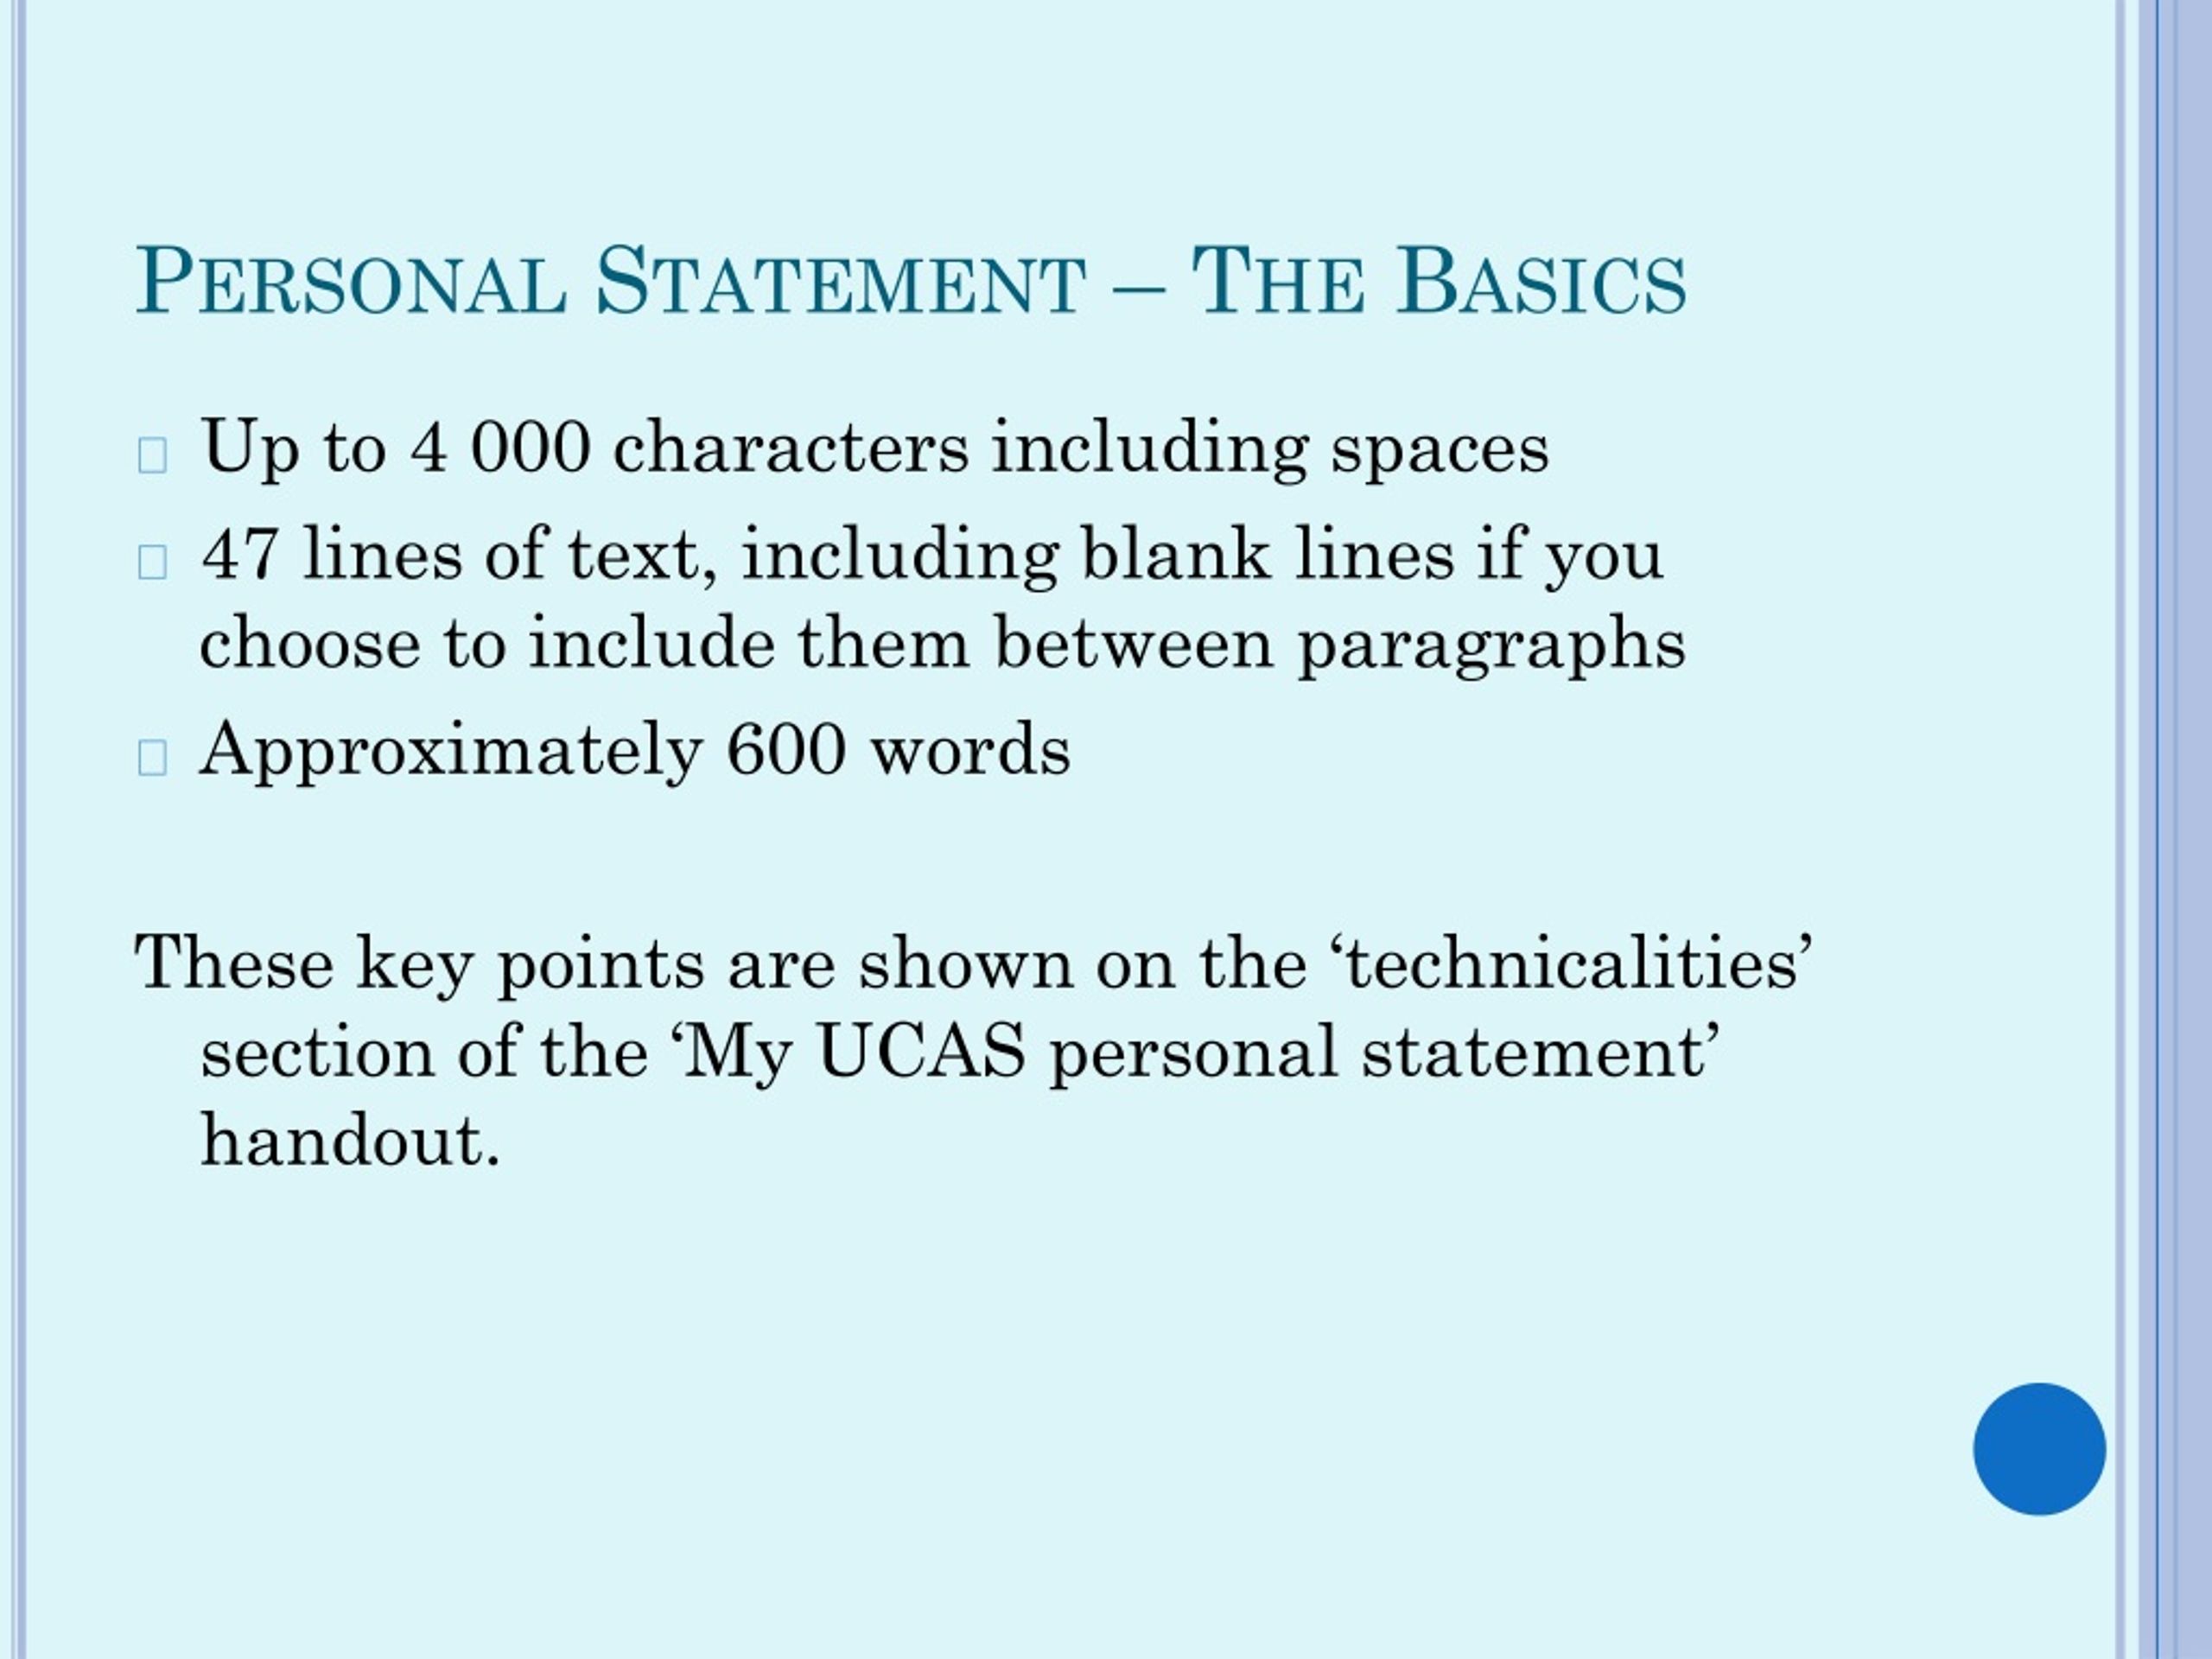 ucas personal statement 47 lines